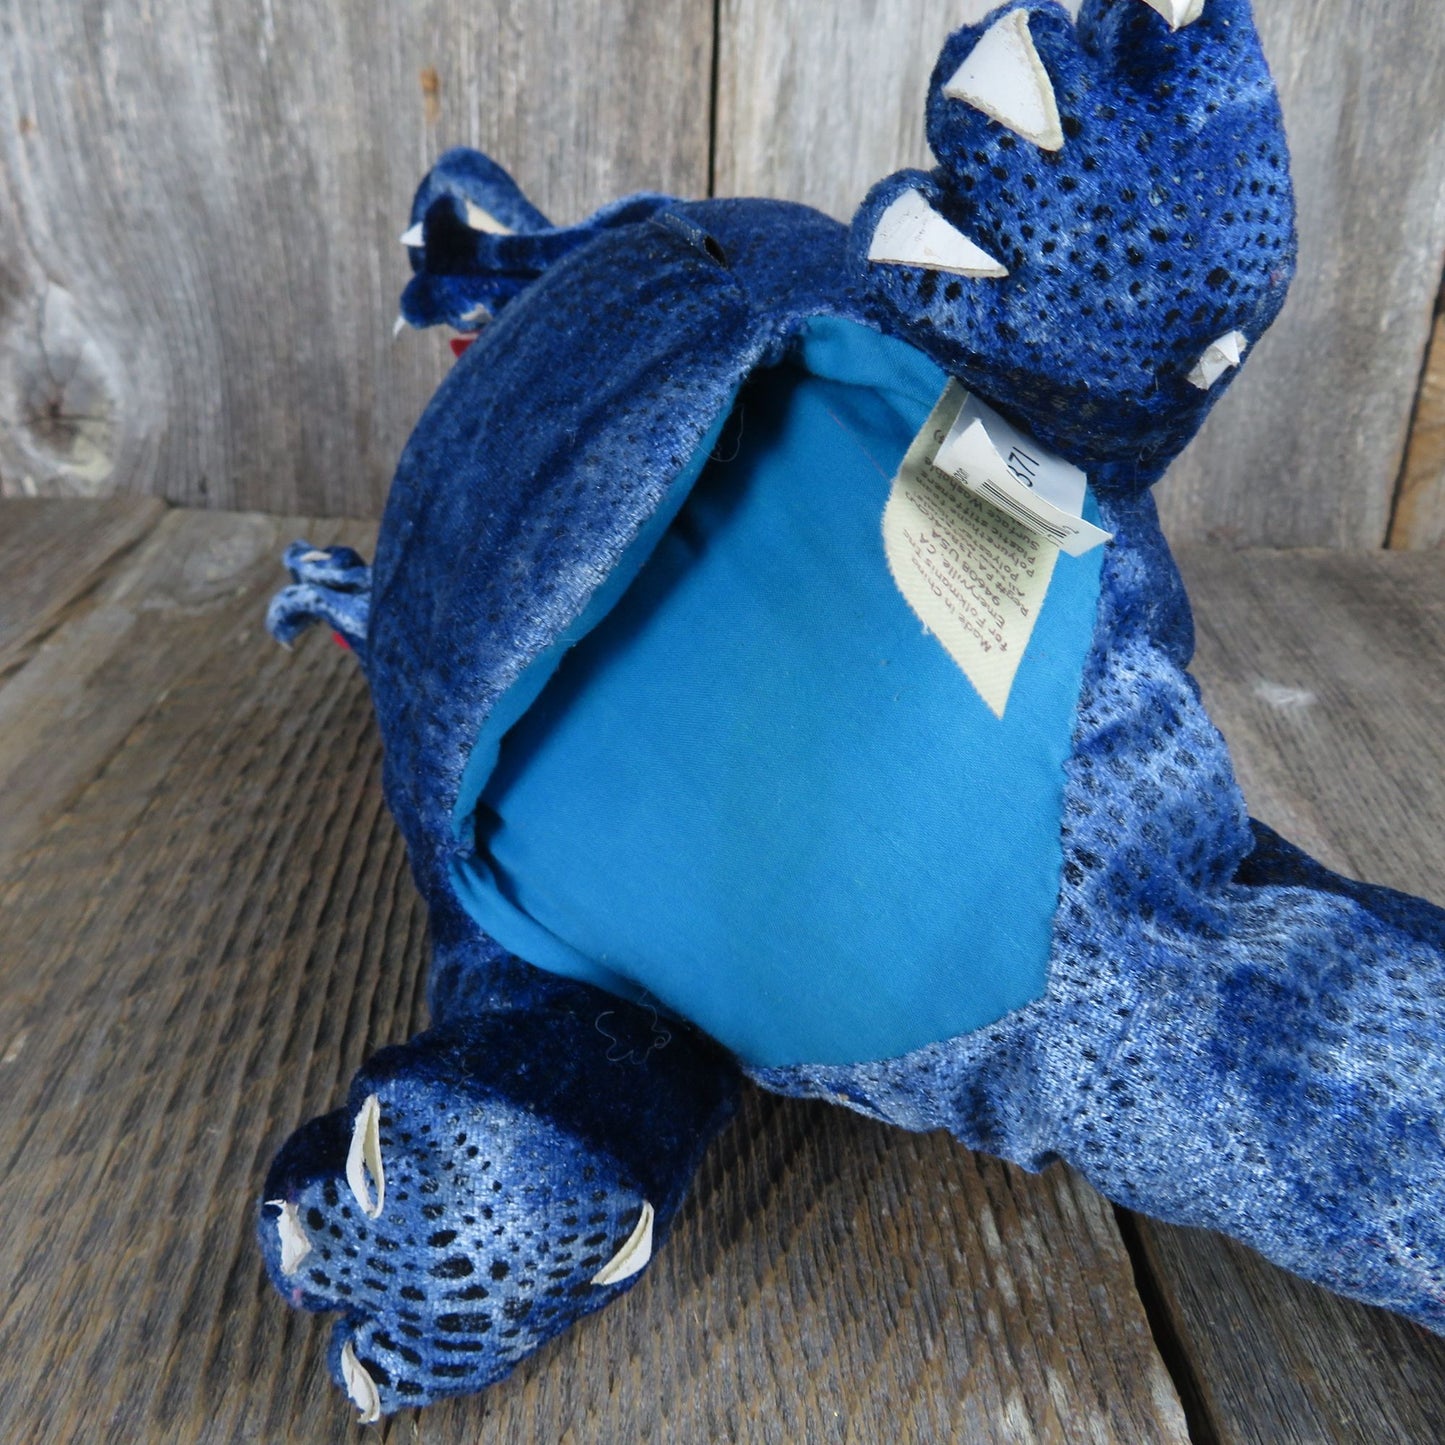 Blue Dragon Puppet Plush 3 Headed Folkmanis Magical Fantasy Full Body Stuffed Animal